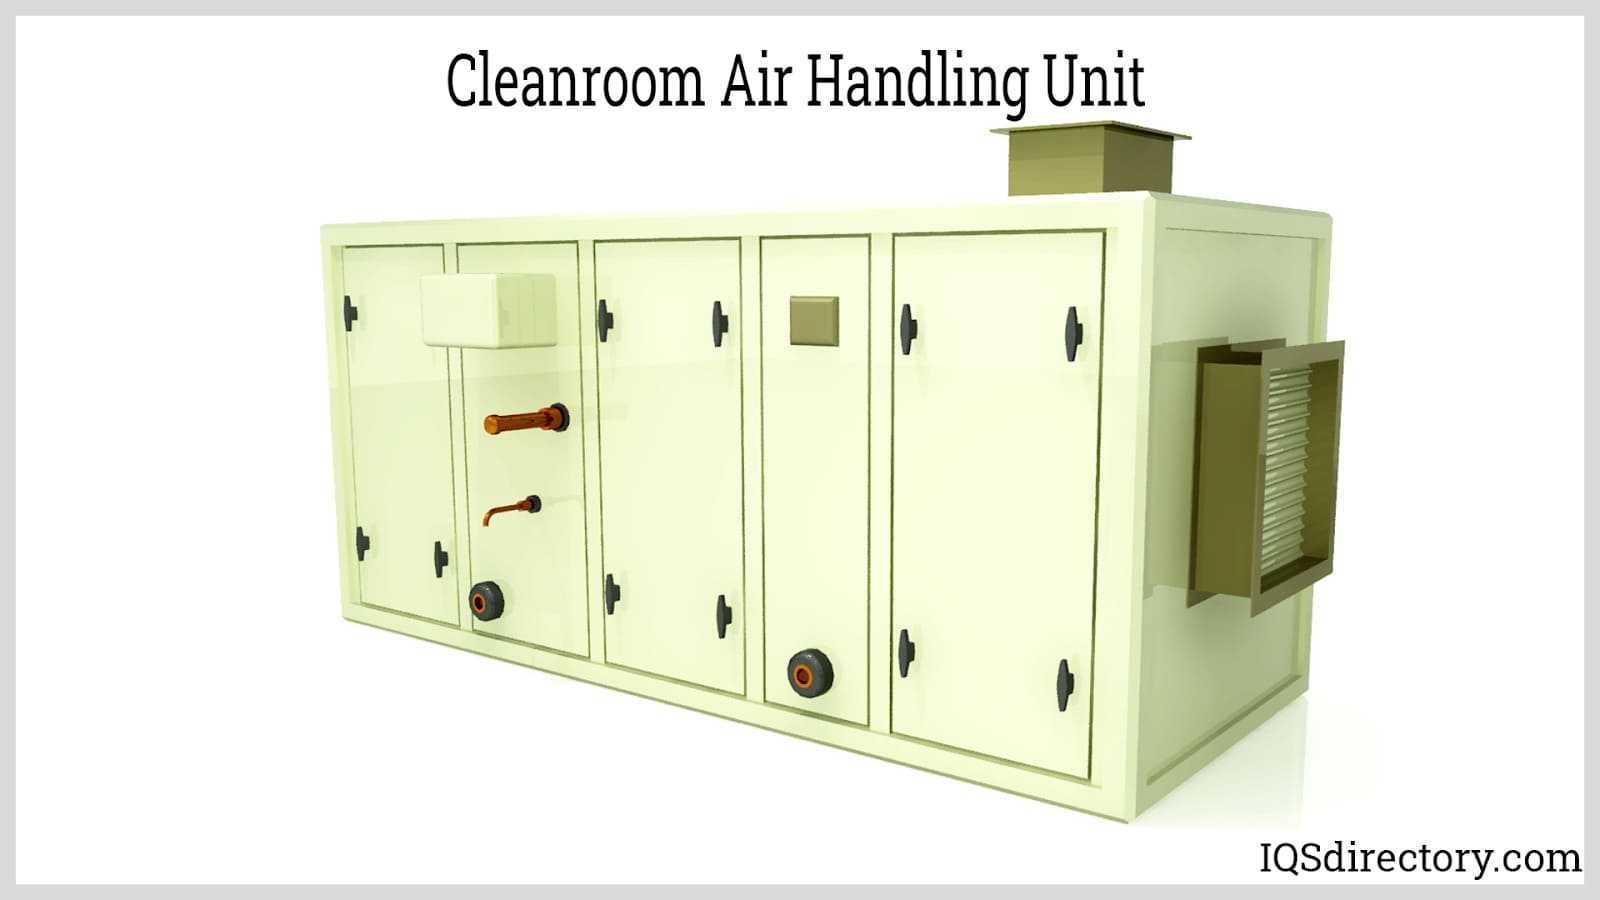 Cleanroom Air Handling Unit